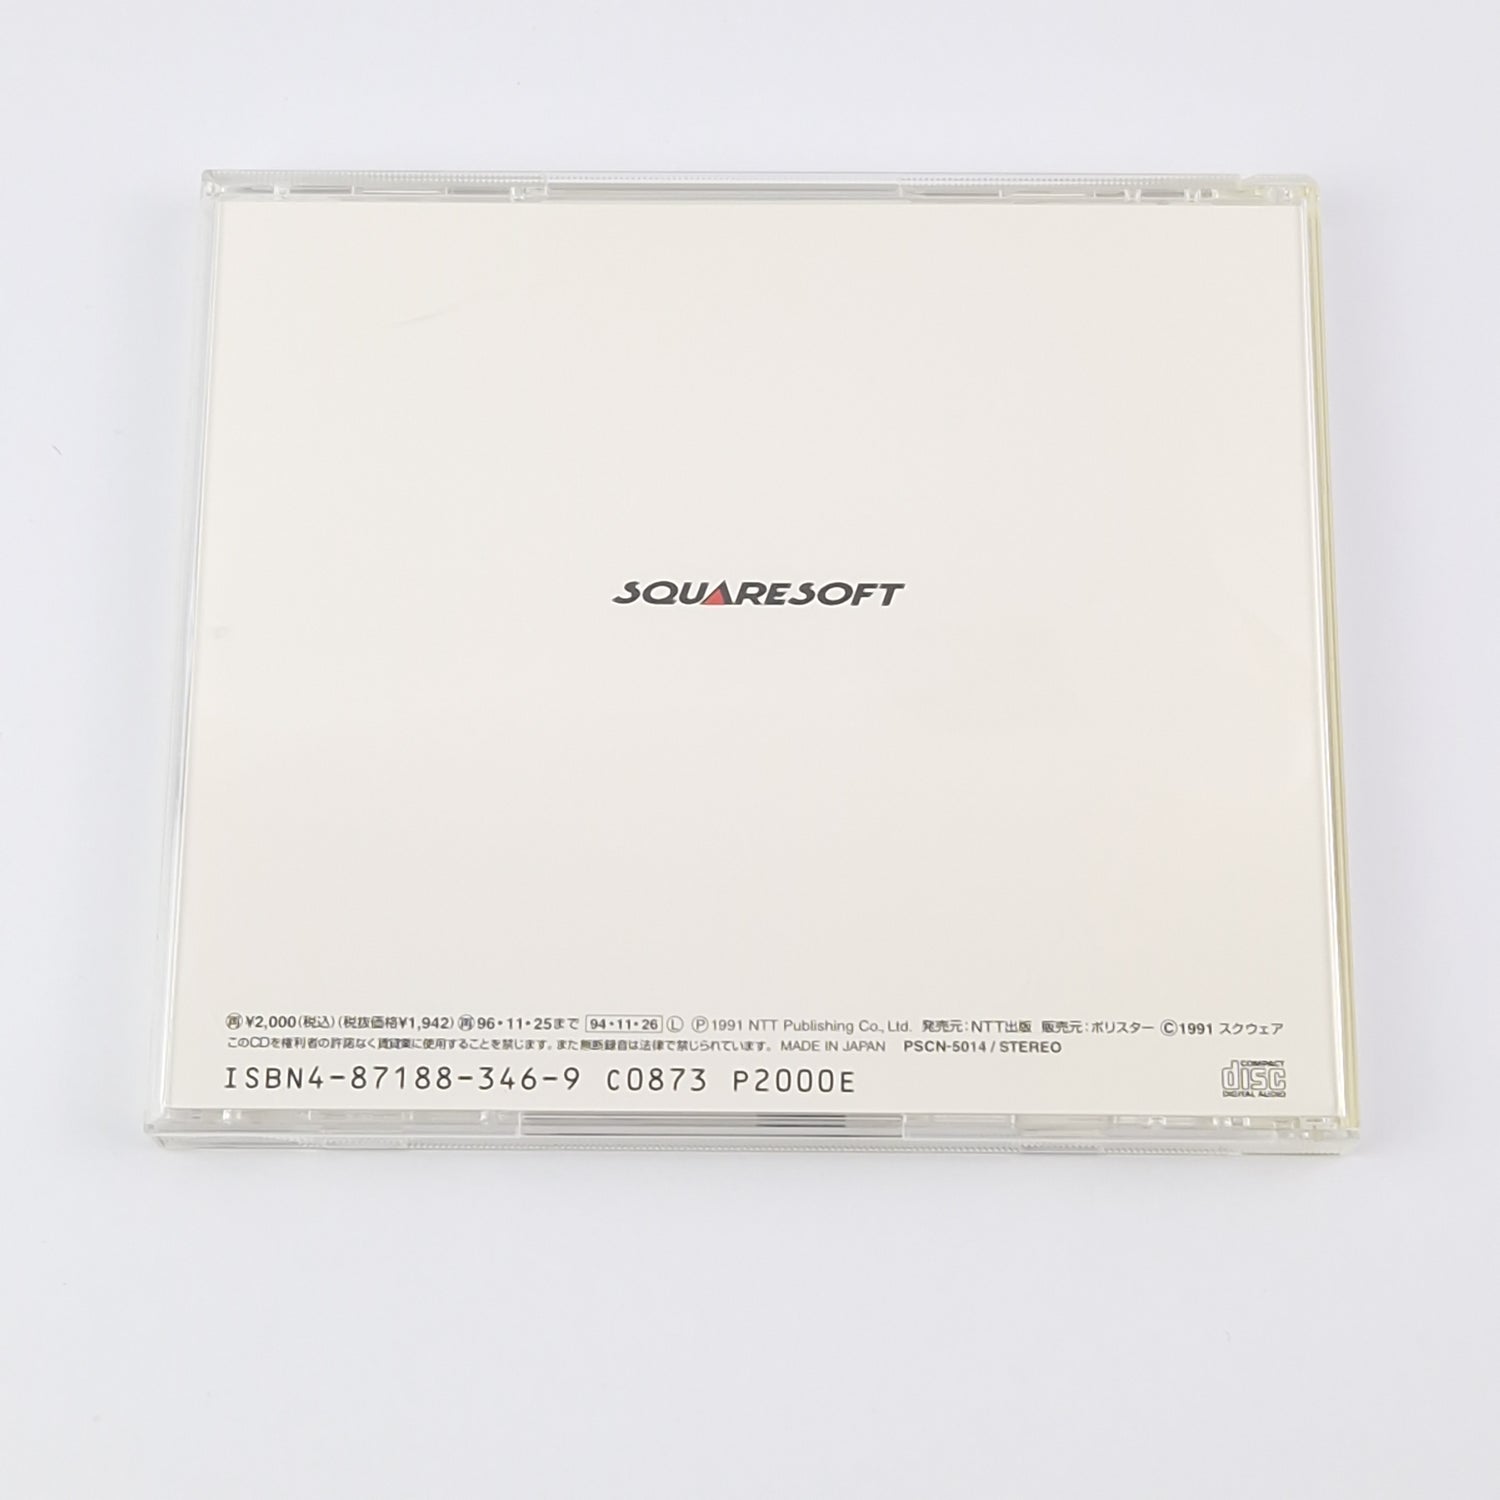 Original Video Game Soundtrack : Final Fantasy IV 4 - Music CD - Polystar